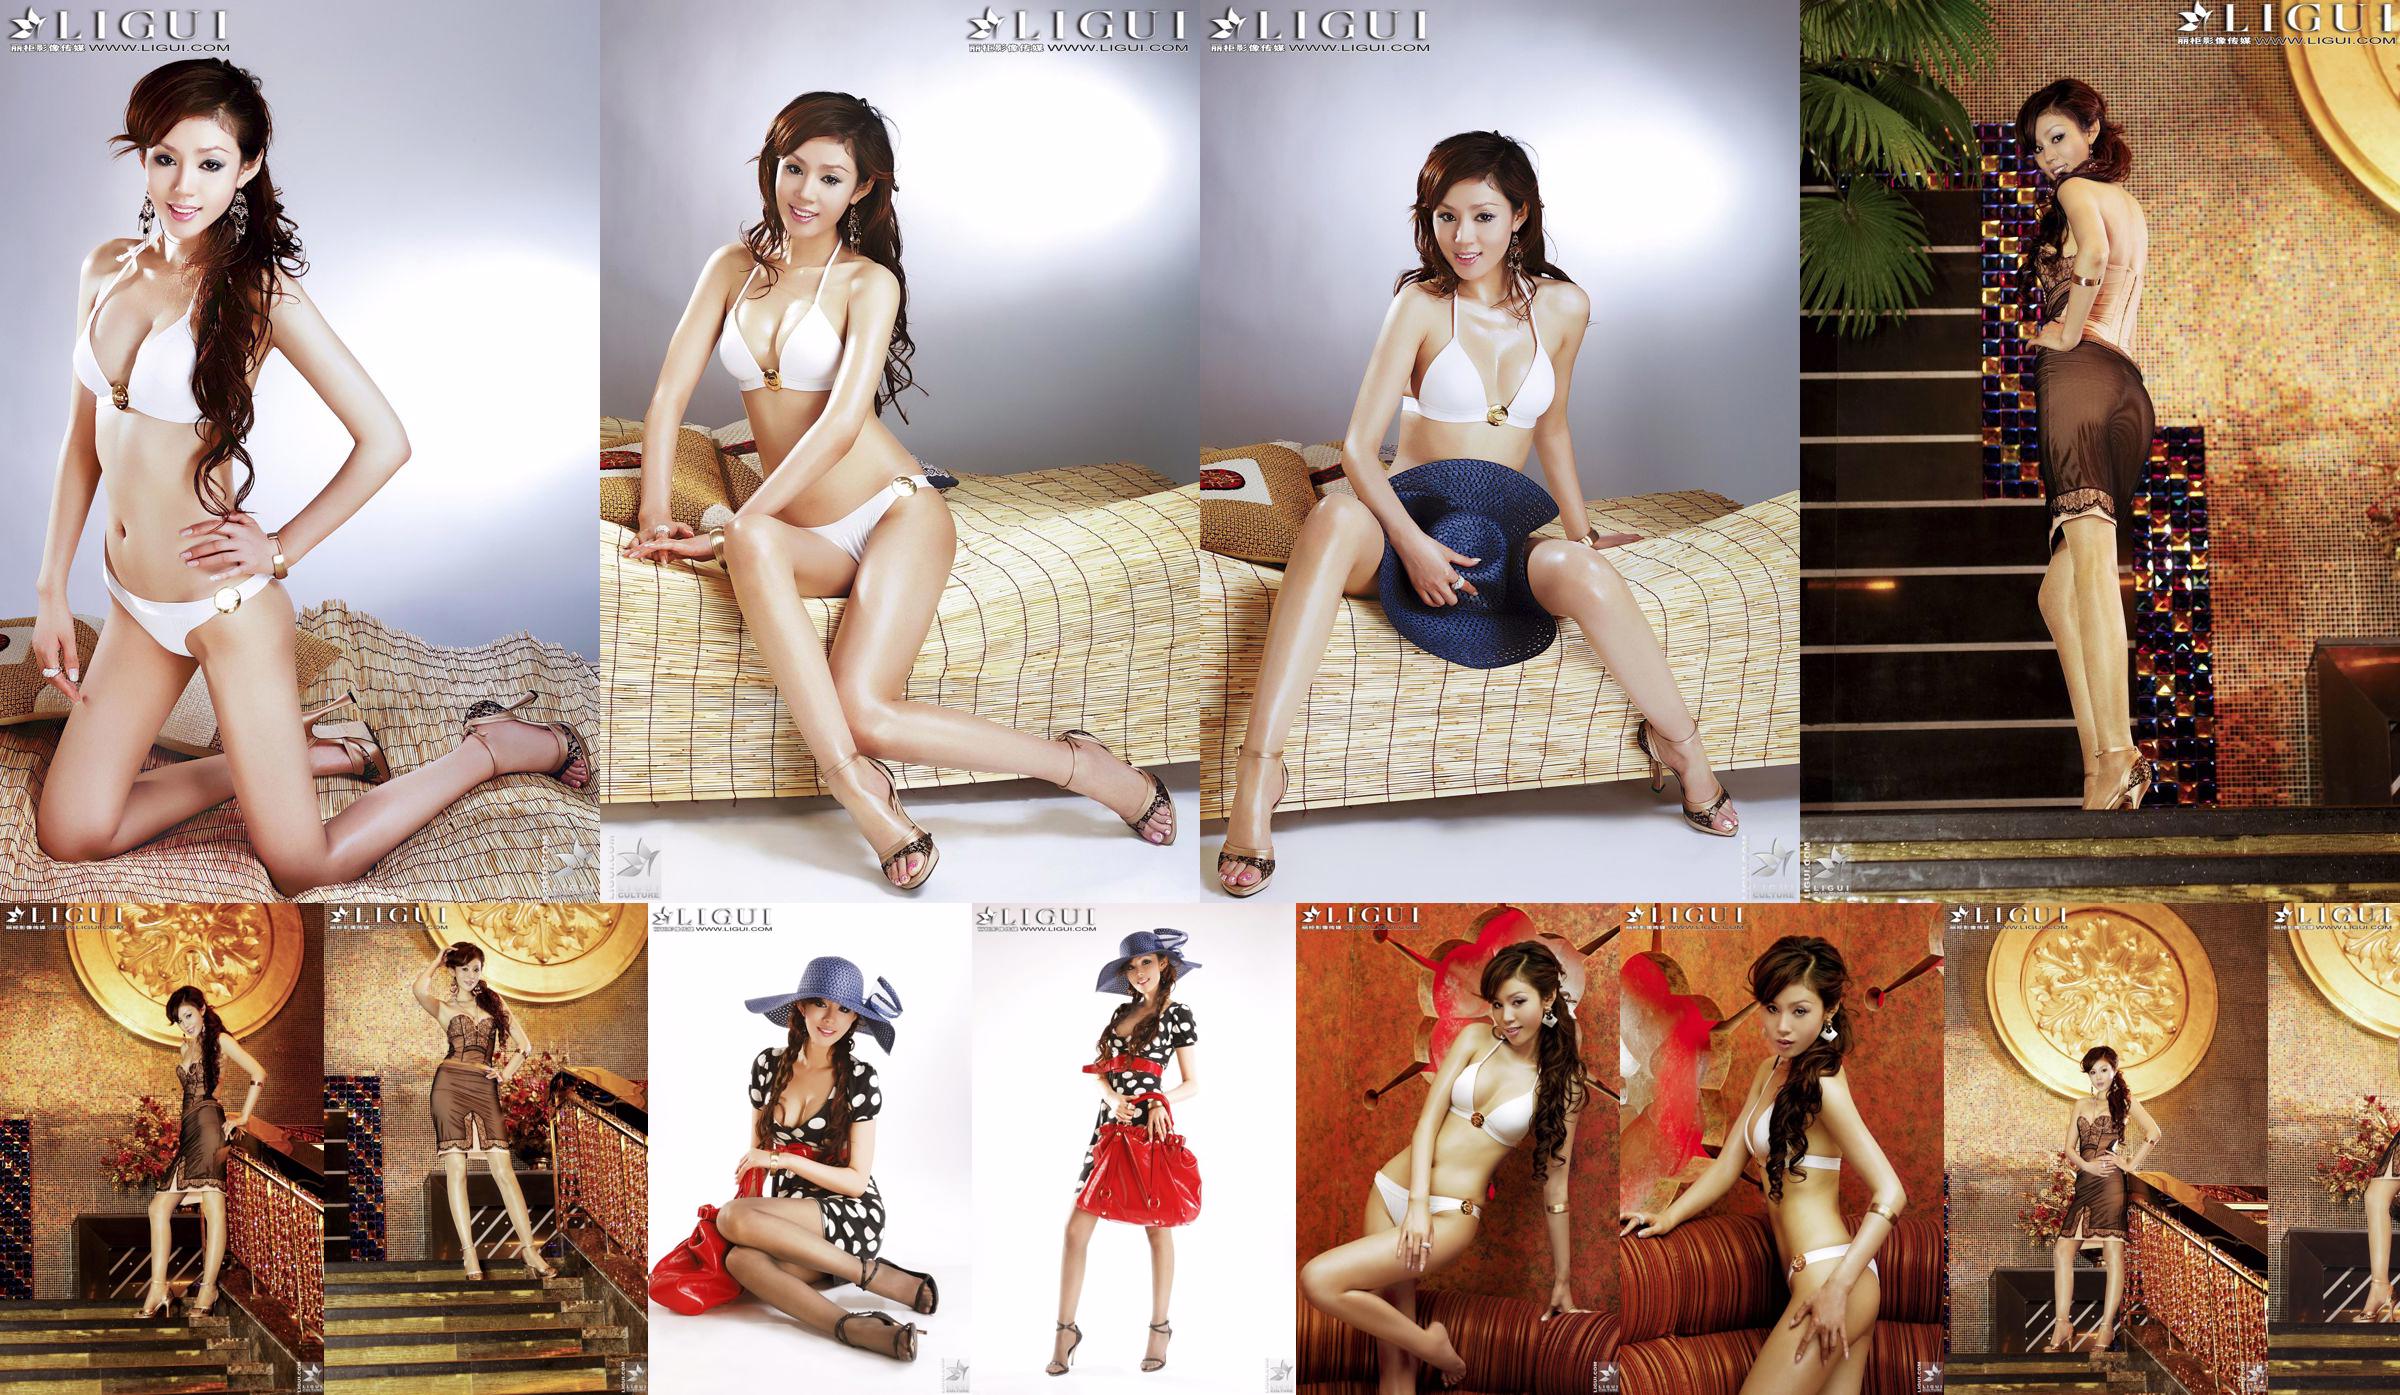 [丽 柜 LiGui] Model Yao Jinjin's "Bikini + Jurk" Mooie benen en zijdeachtige voeten Foto Foto No.04e115 Pagina 6